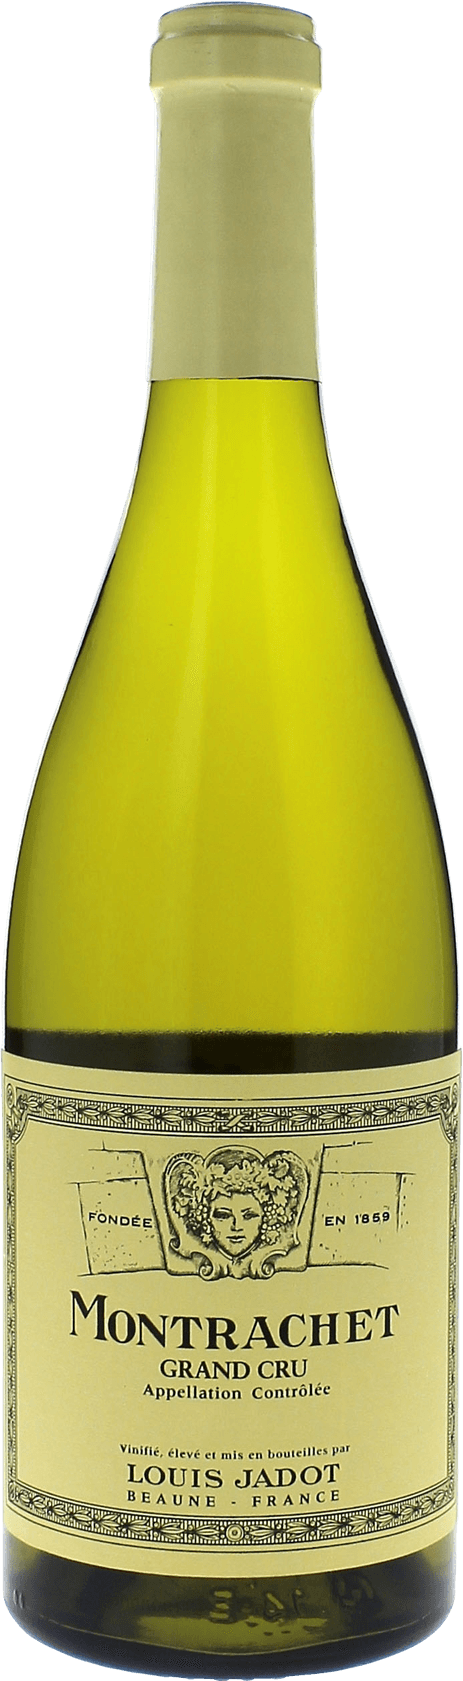 Montrachet grand cru 2017  Jadot Louis, Bourgogne blanc